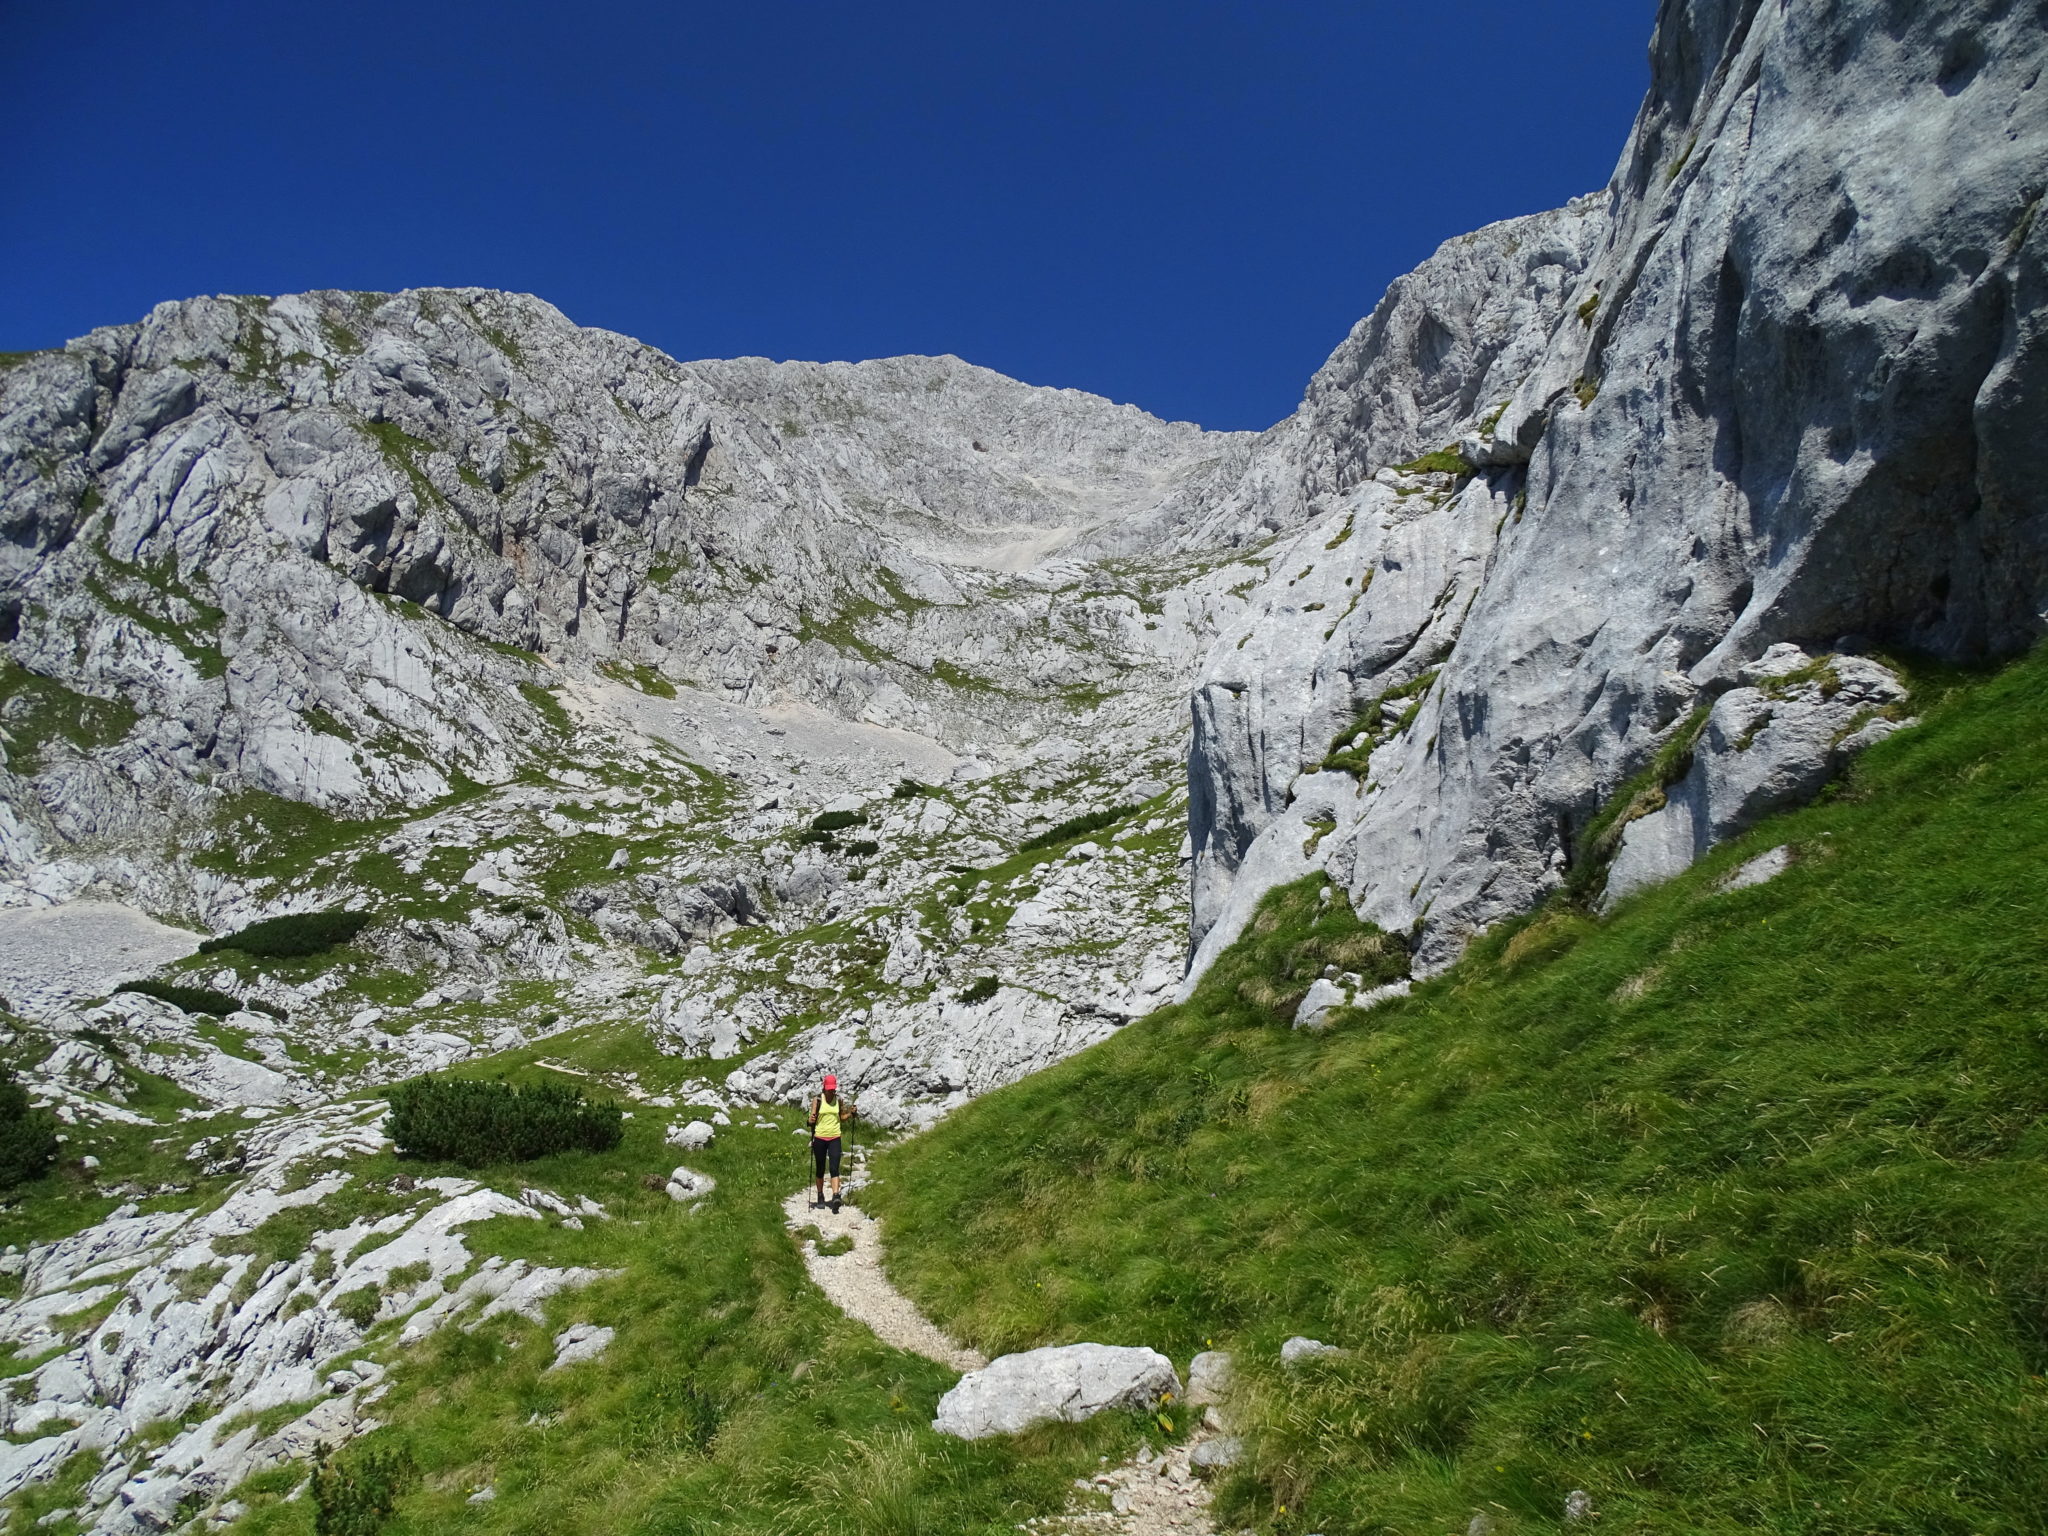 Returning from Grintovec, the highest mountain in the Kamnik-Savinja Alps